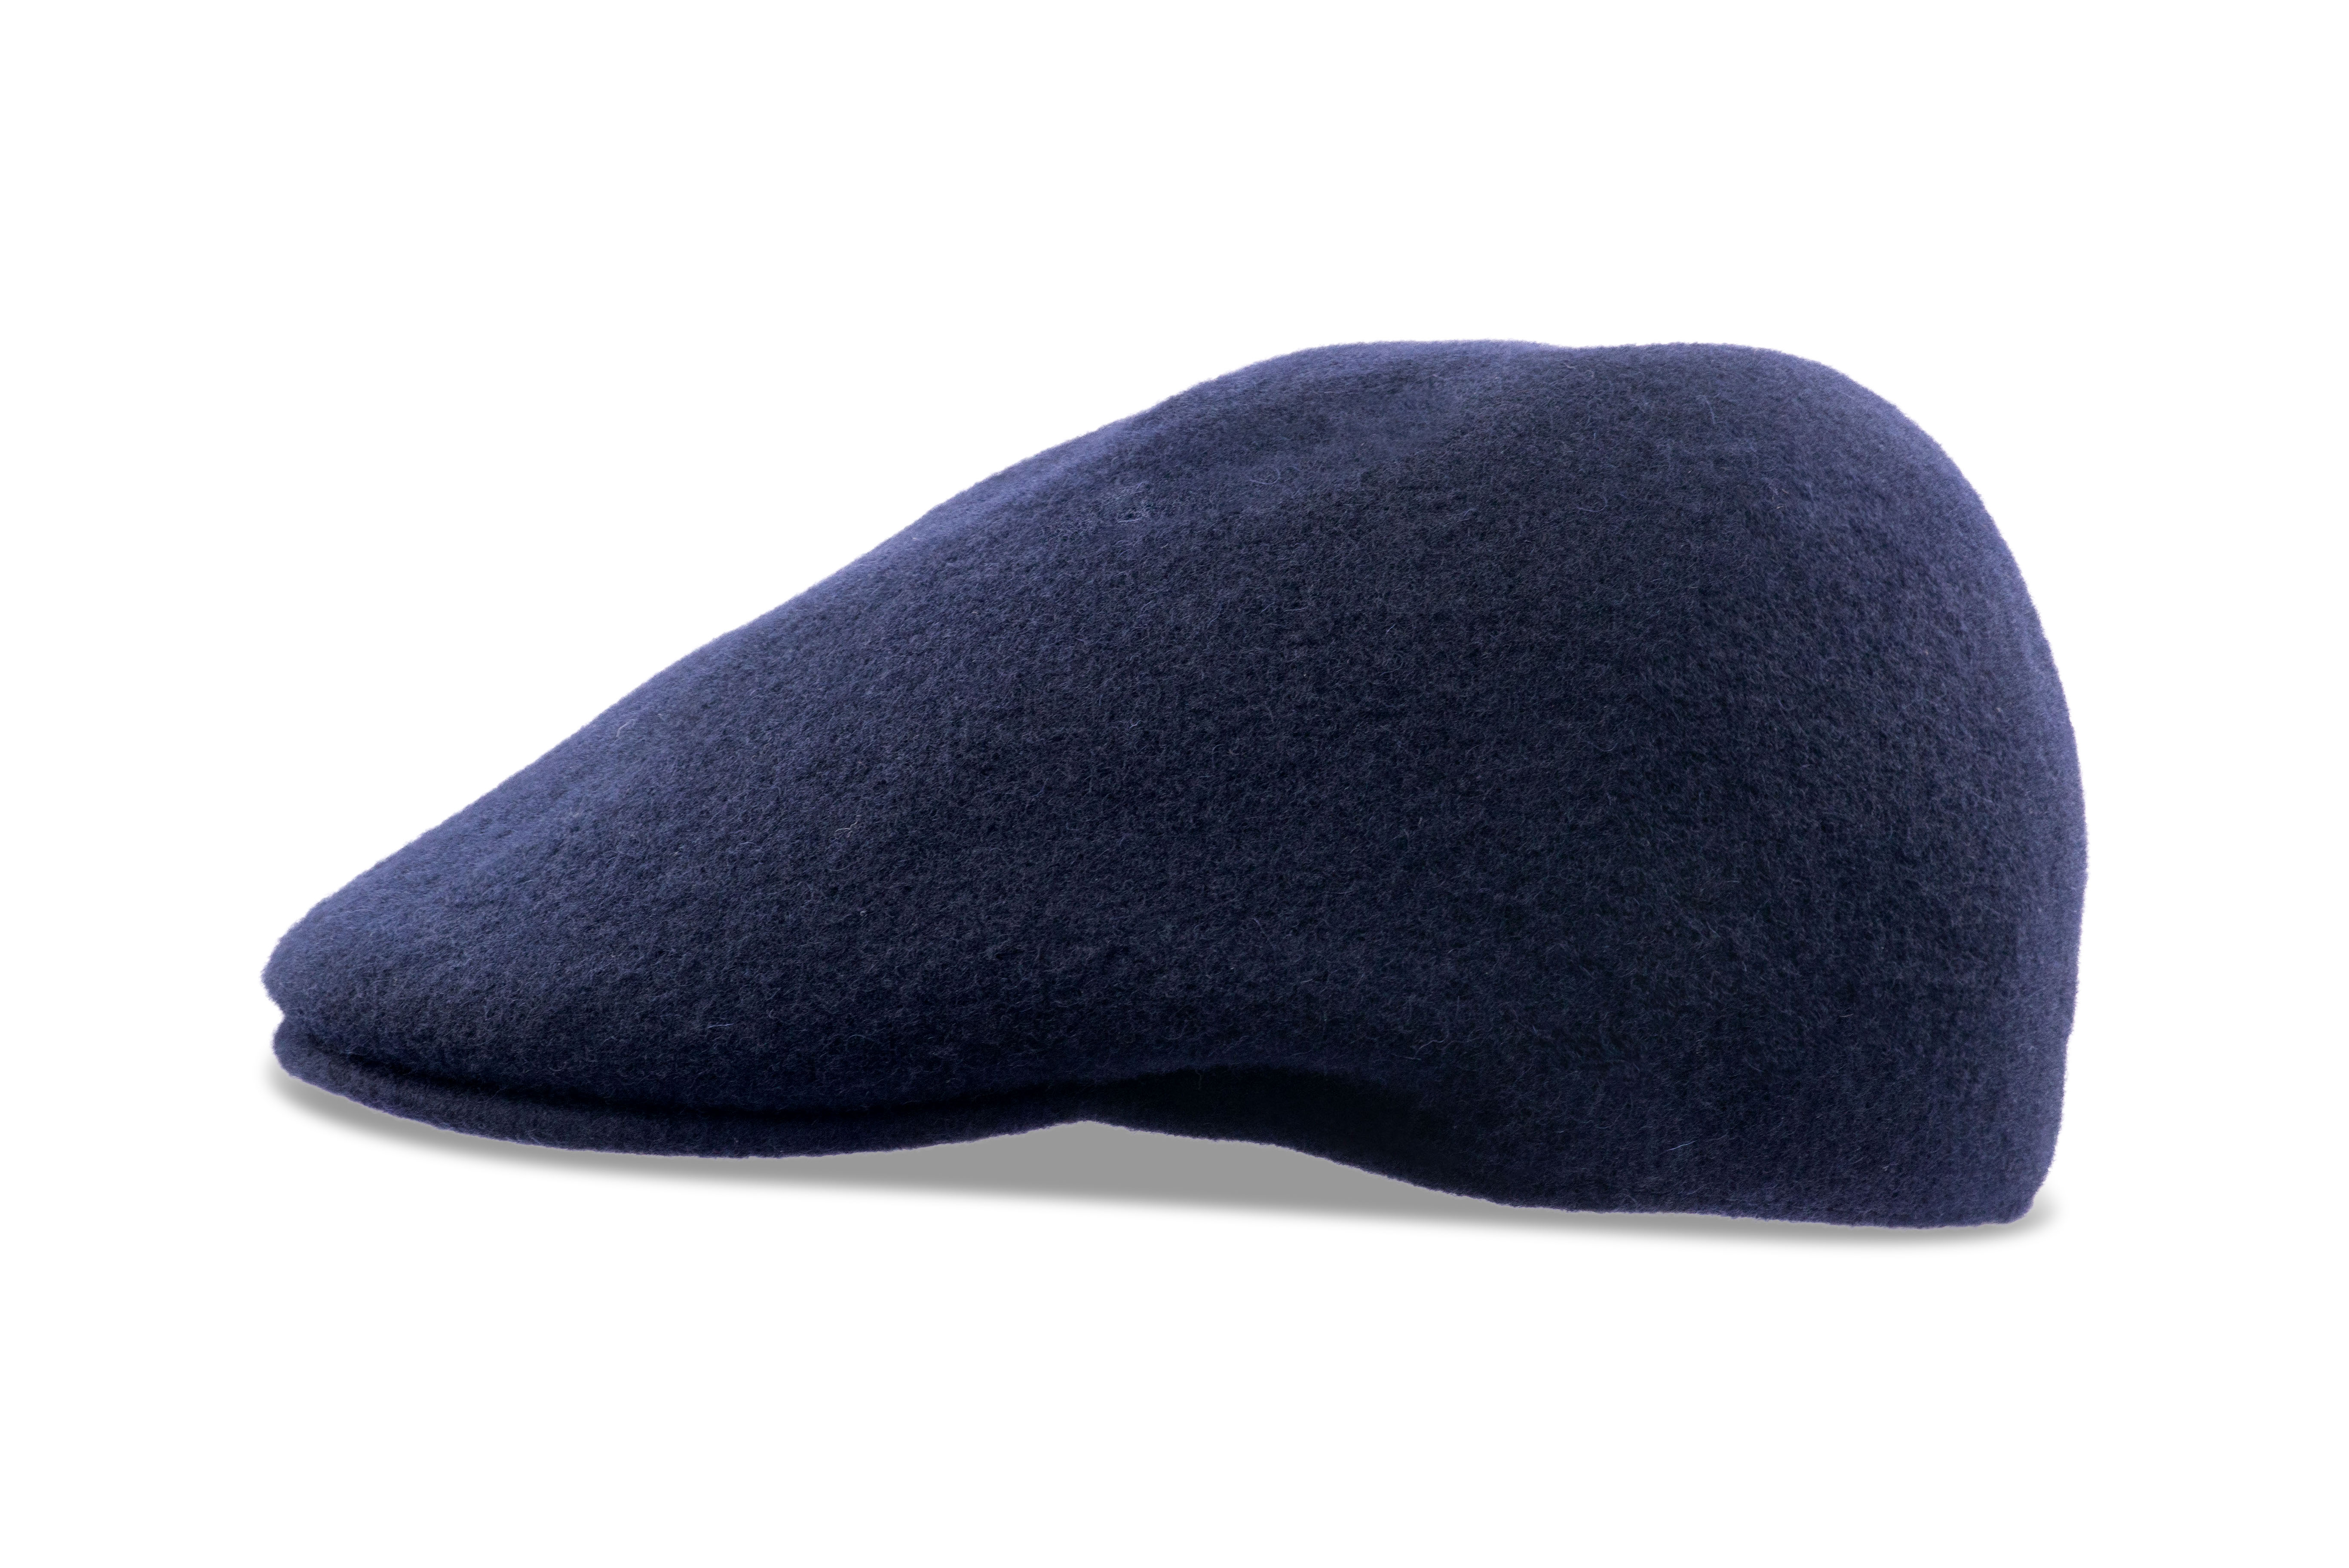 Kangol Seamless Wool 507 Felt Hat for Men and Women - Dark Blue - S